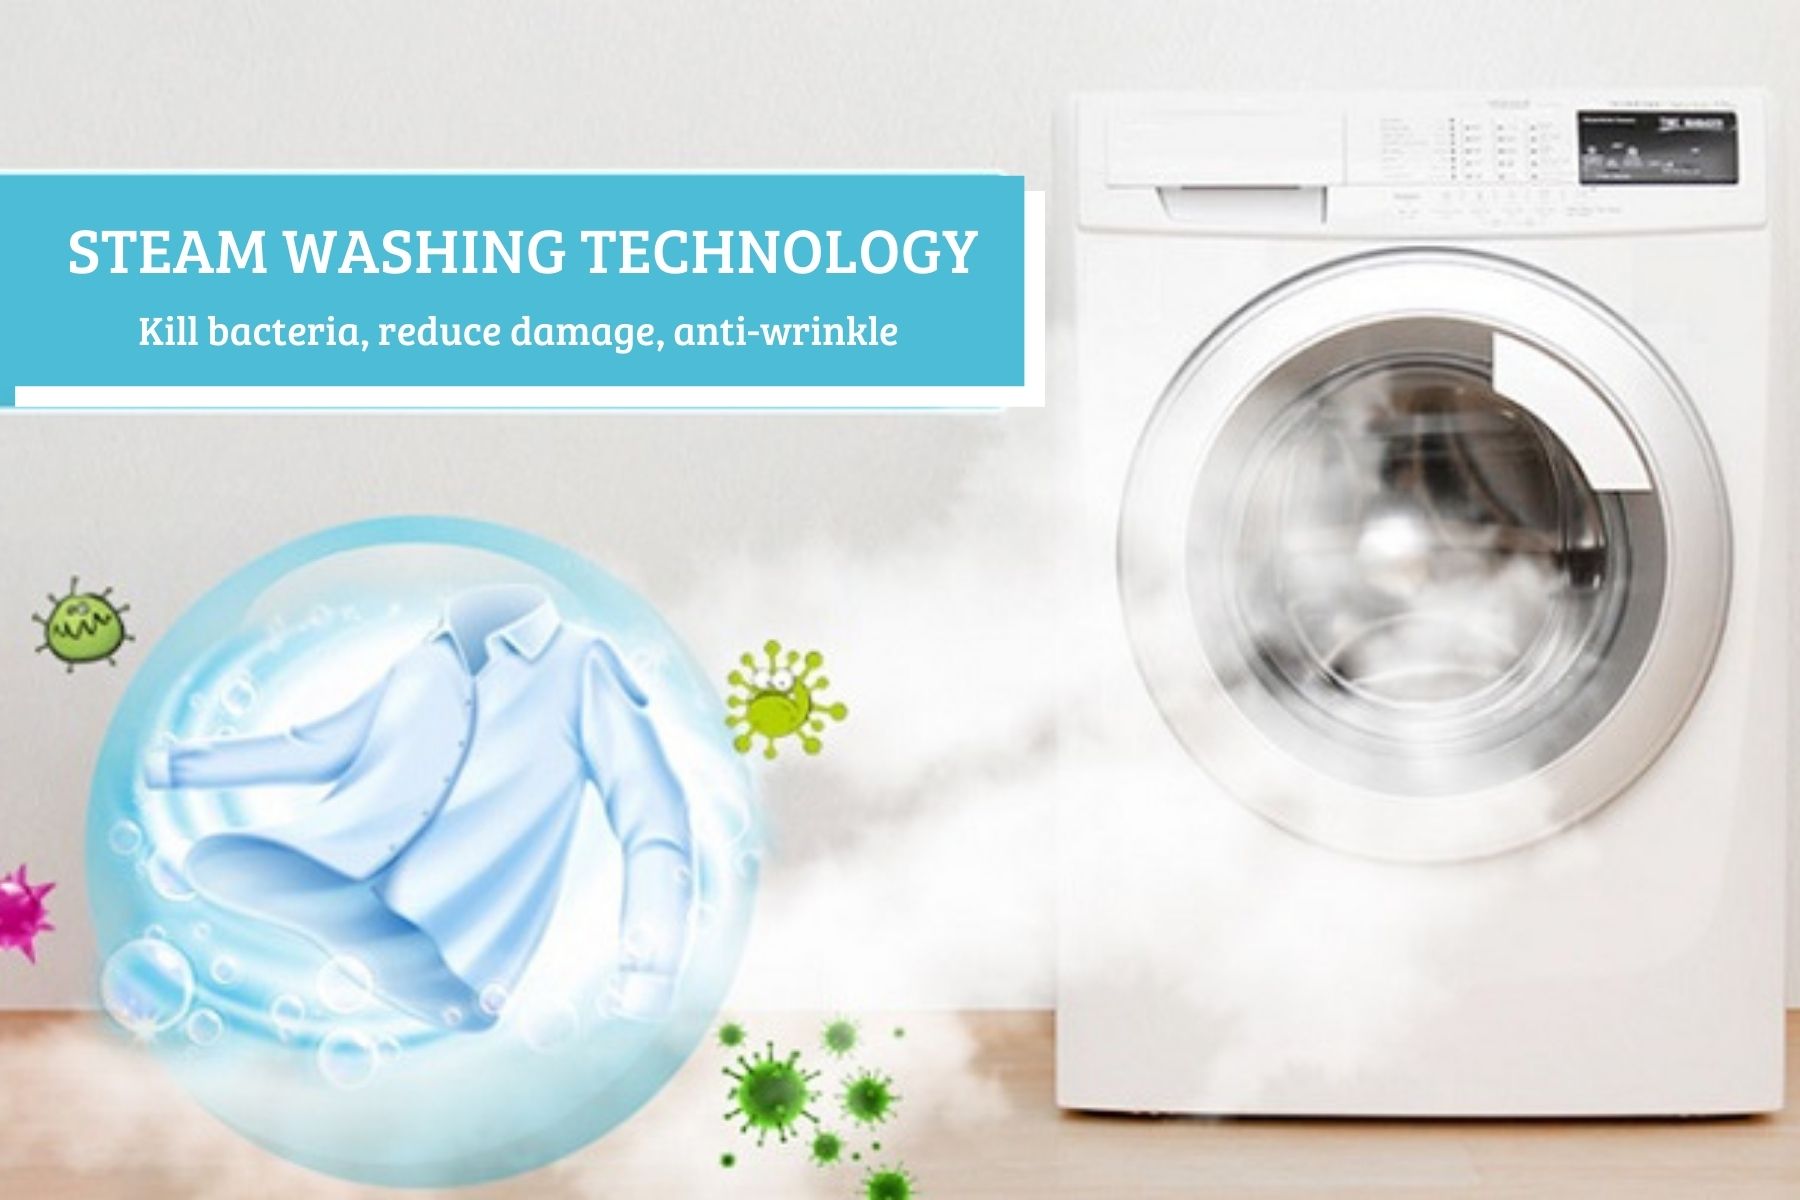 Steam washing technology